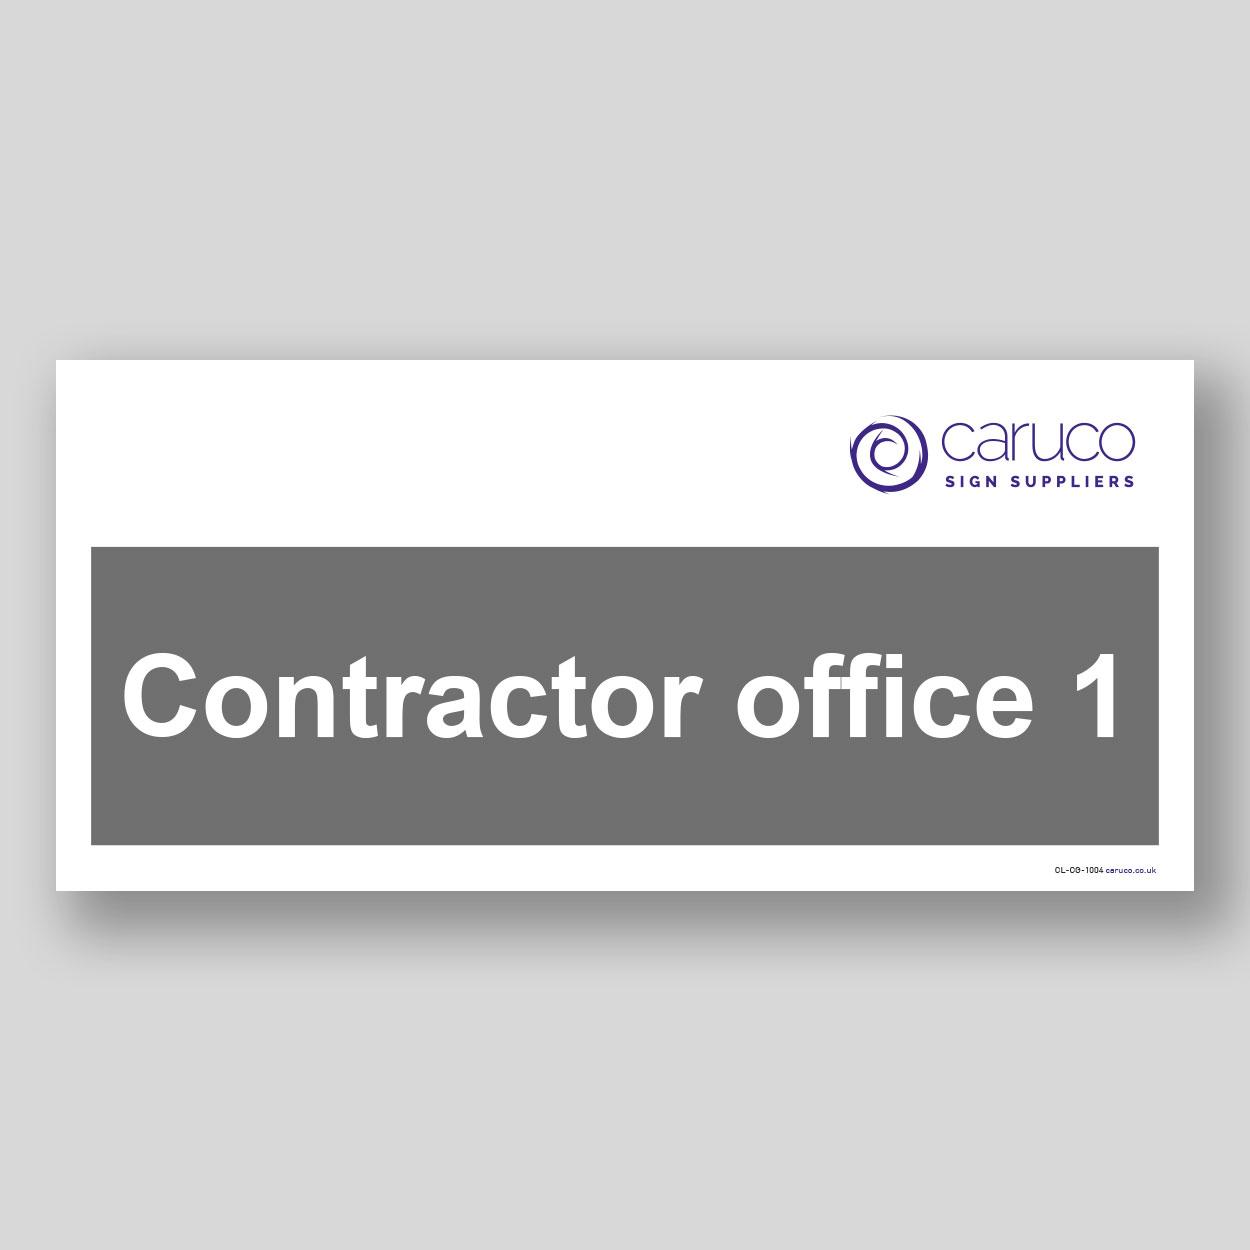 CL-CG-1004 Contractor office 1